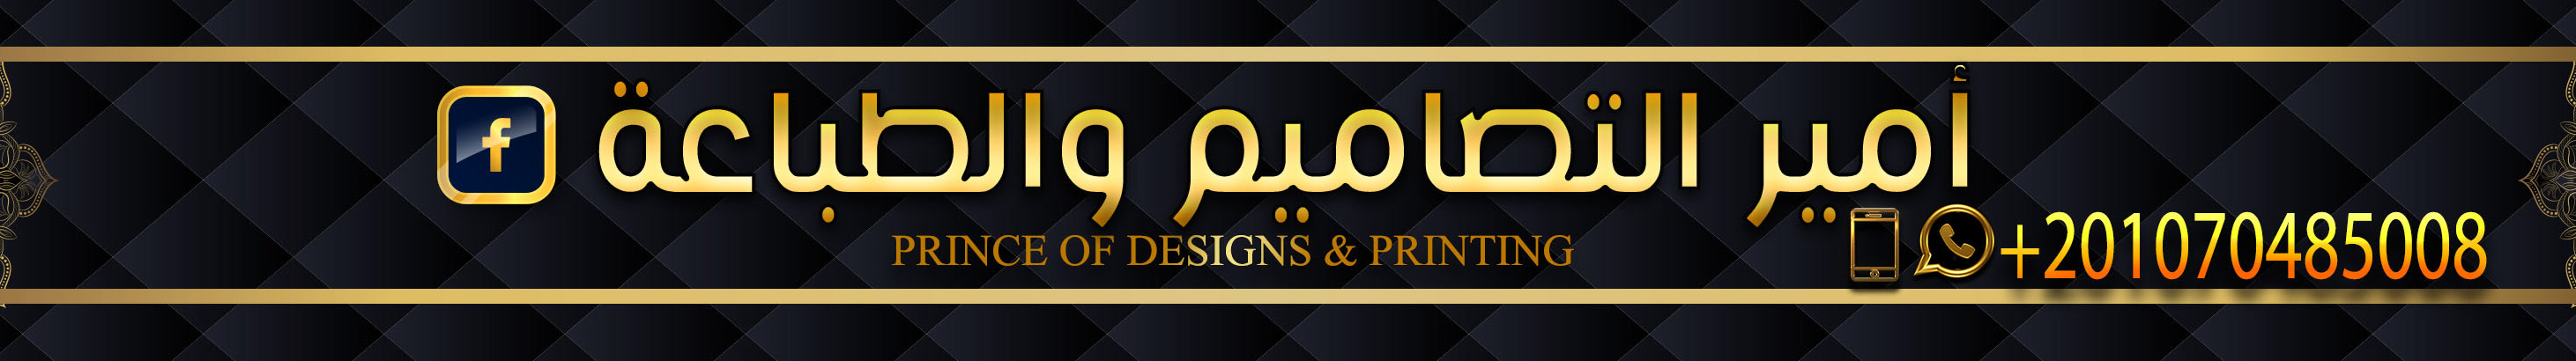 Prince of Designs's profile banner